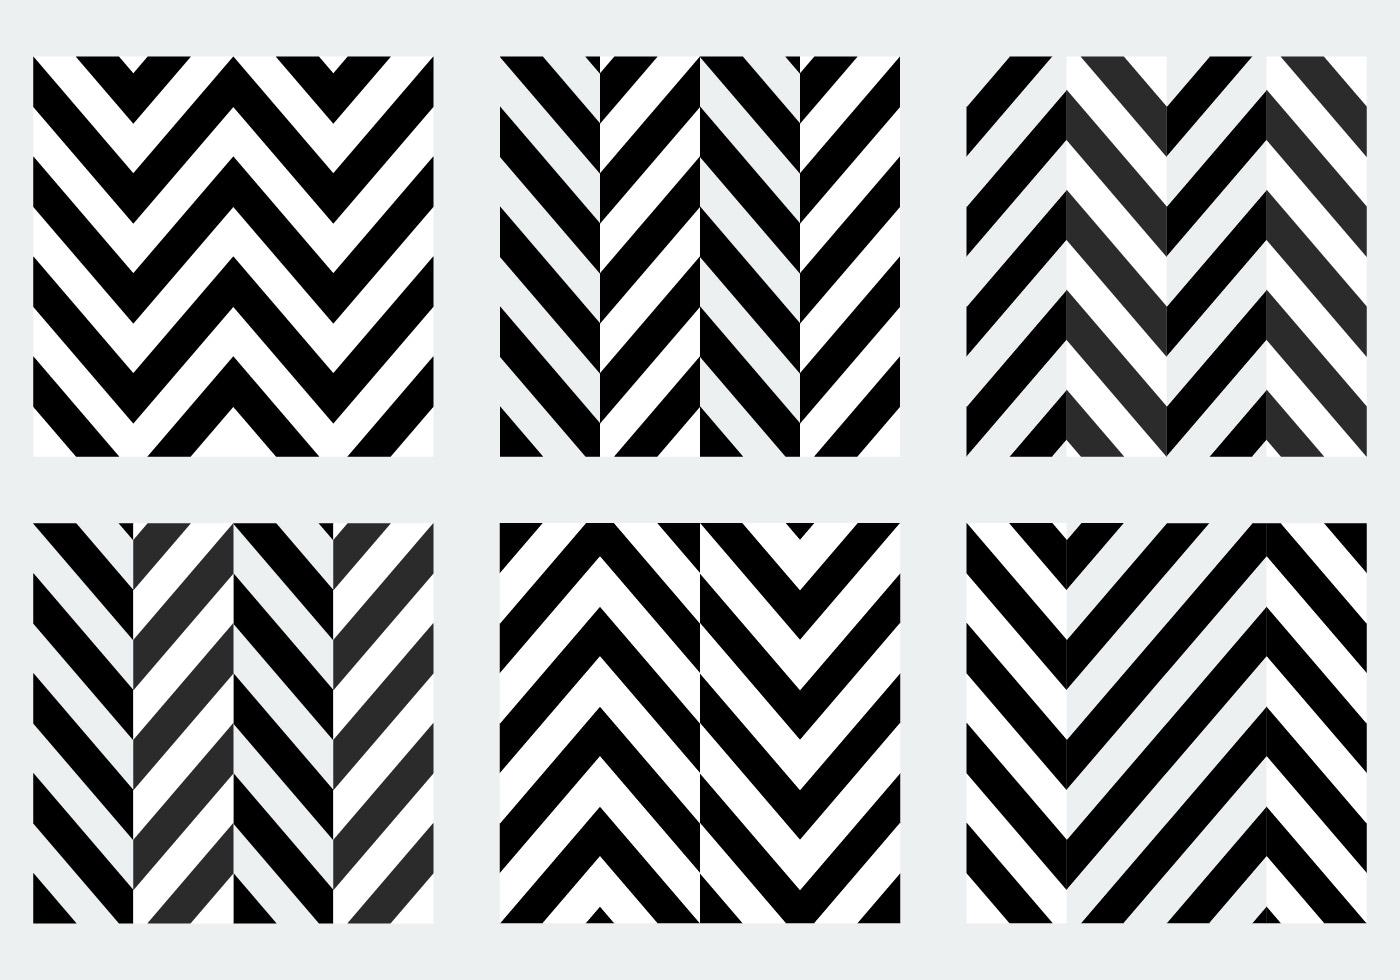 Black and White Herringbone Patterns - Download Free Vector Art, Stock